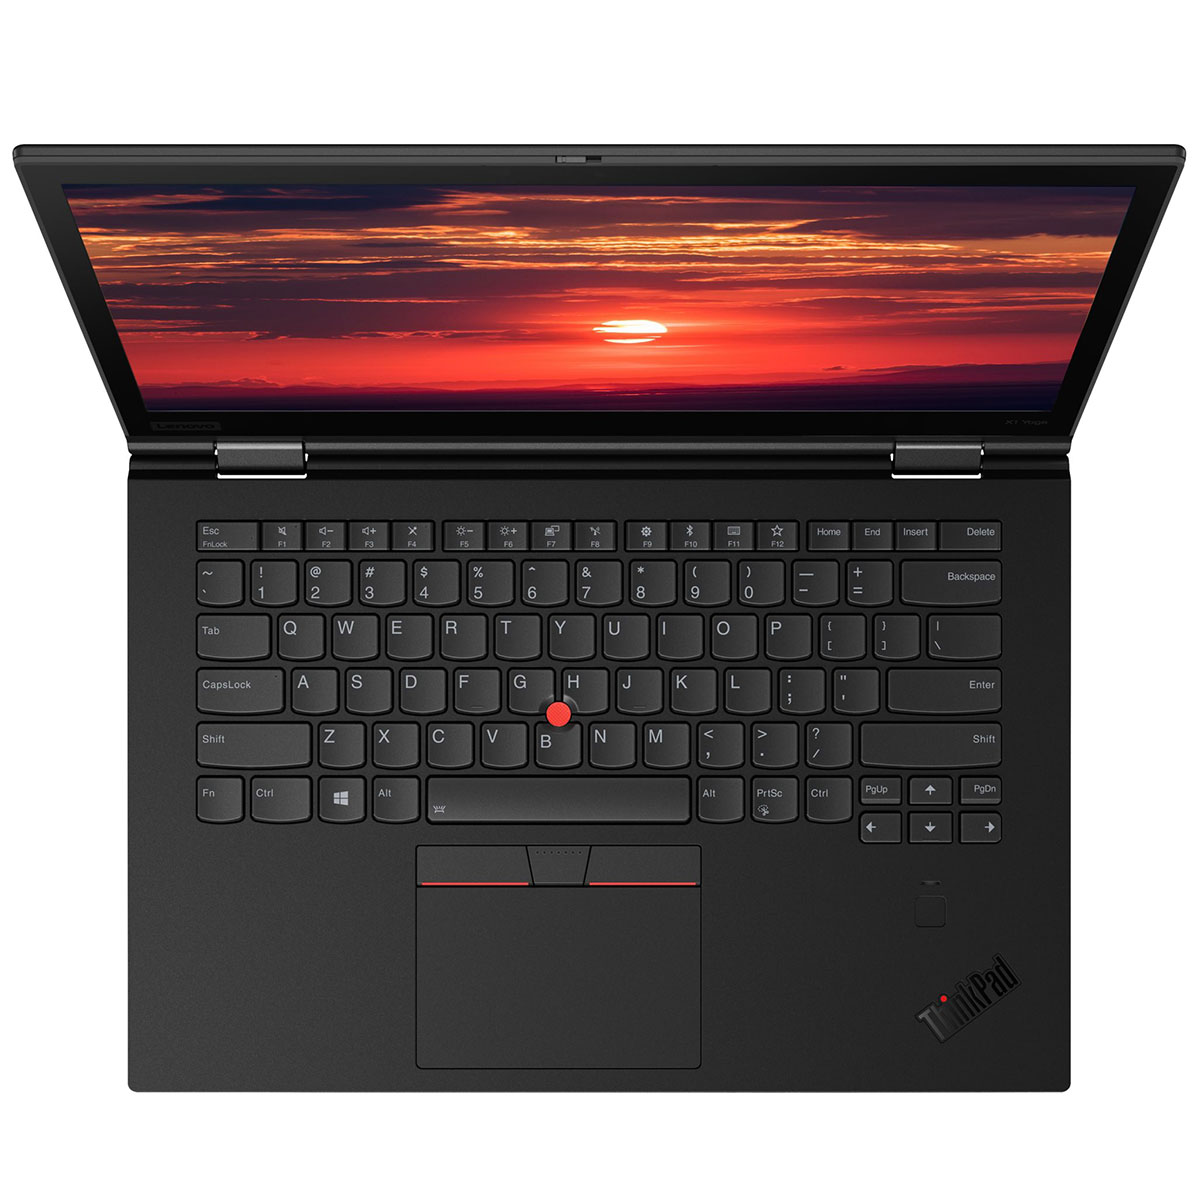 Lenovo ThinkPad x1 yoga, Intel Core i5-8th Generation CPU, 8GB RAM, 256GB  SSD, 14 inch Touchscreen 360°, Windows 10 Pro